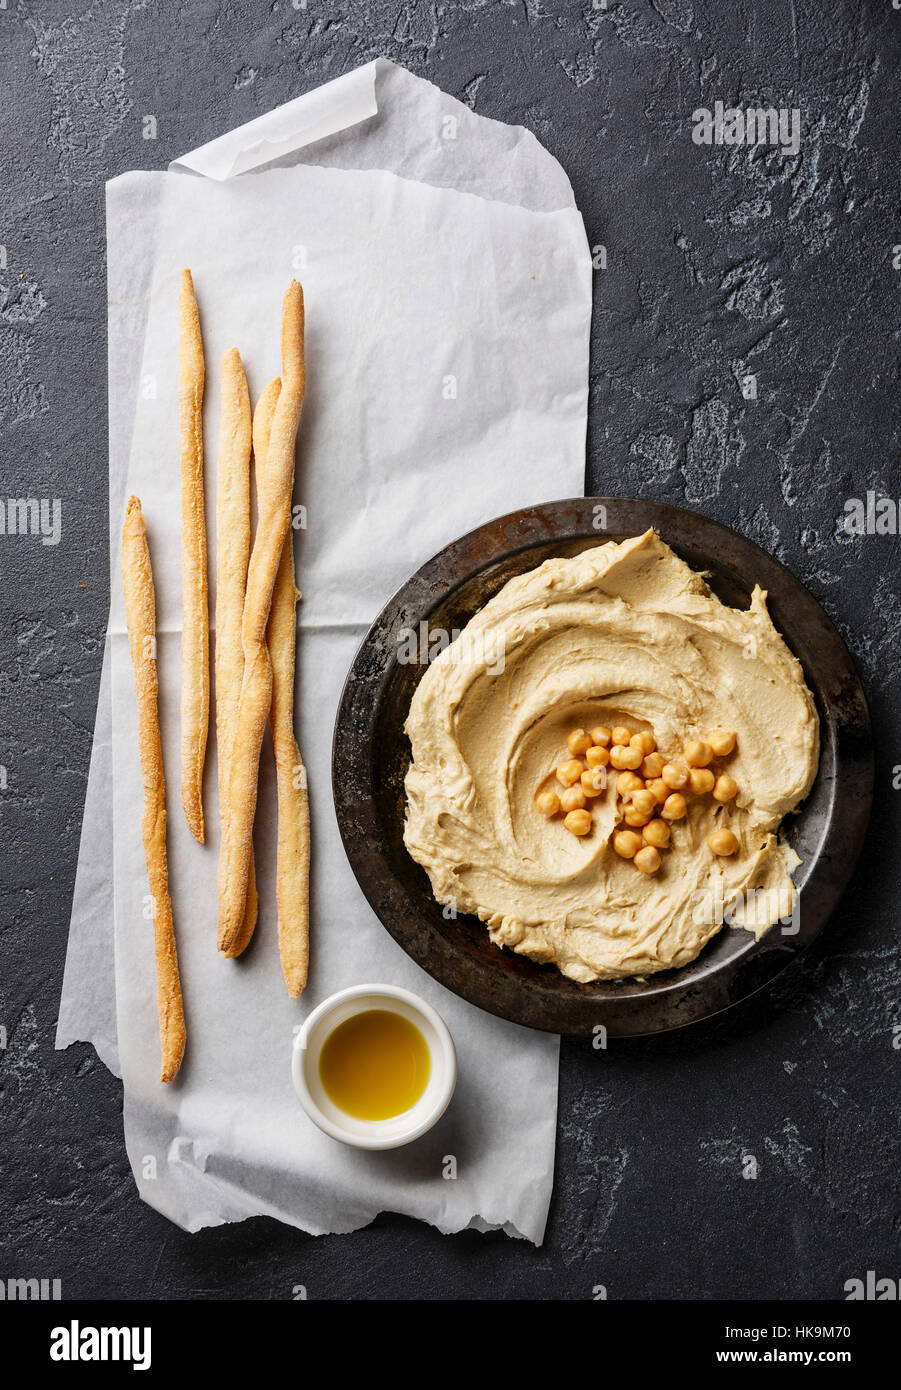 Homemade creamy hummus and Bread sticks on black stone background Stock Photo